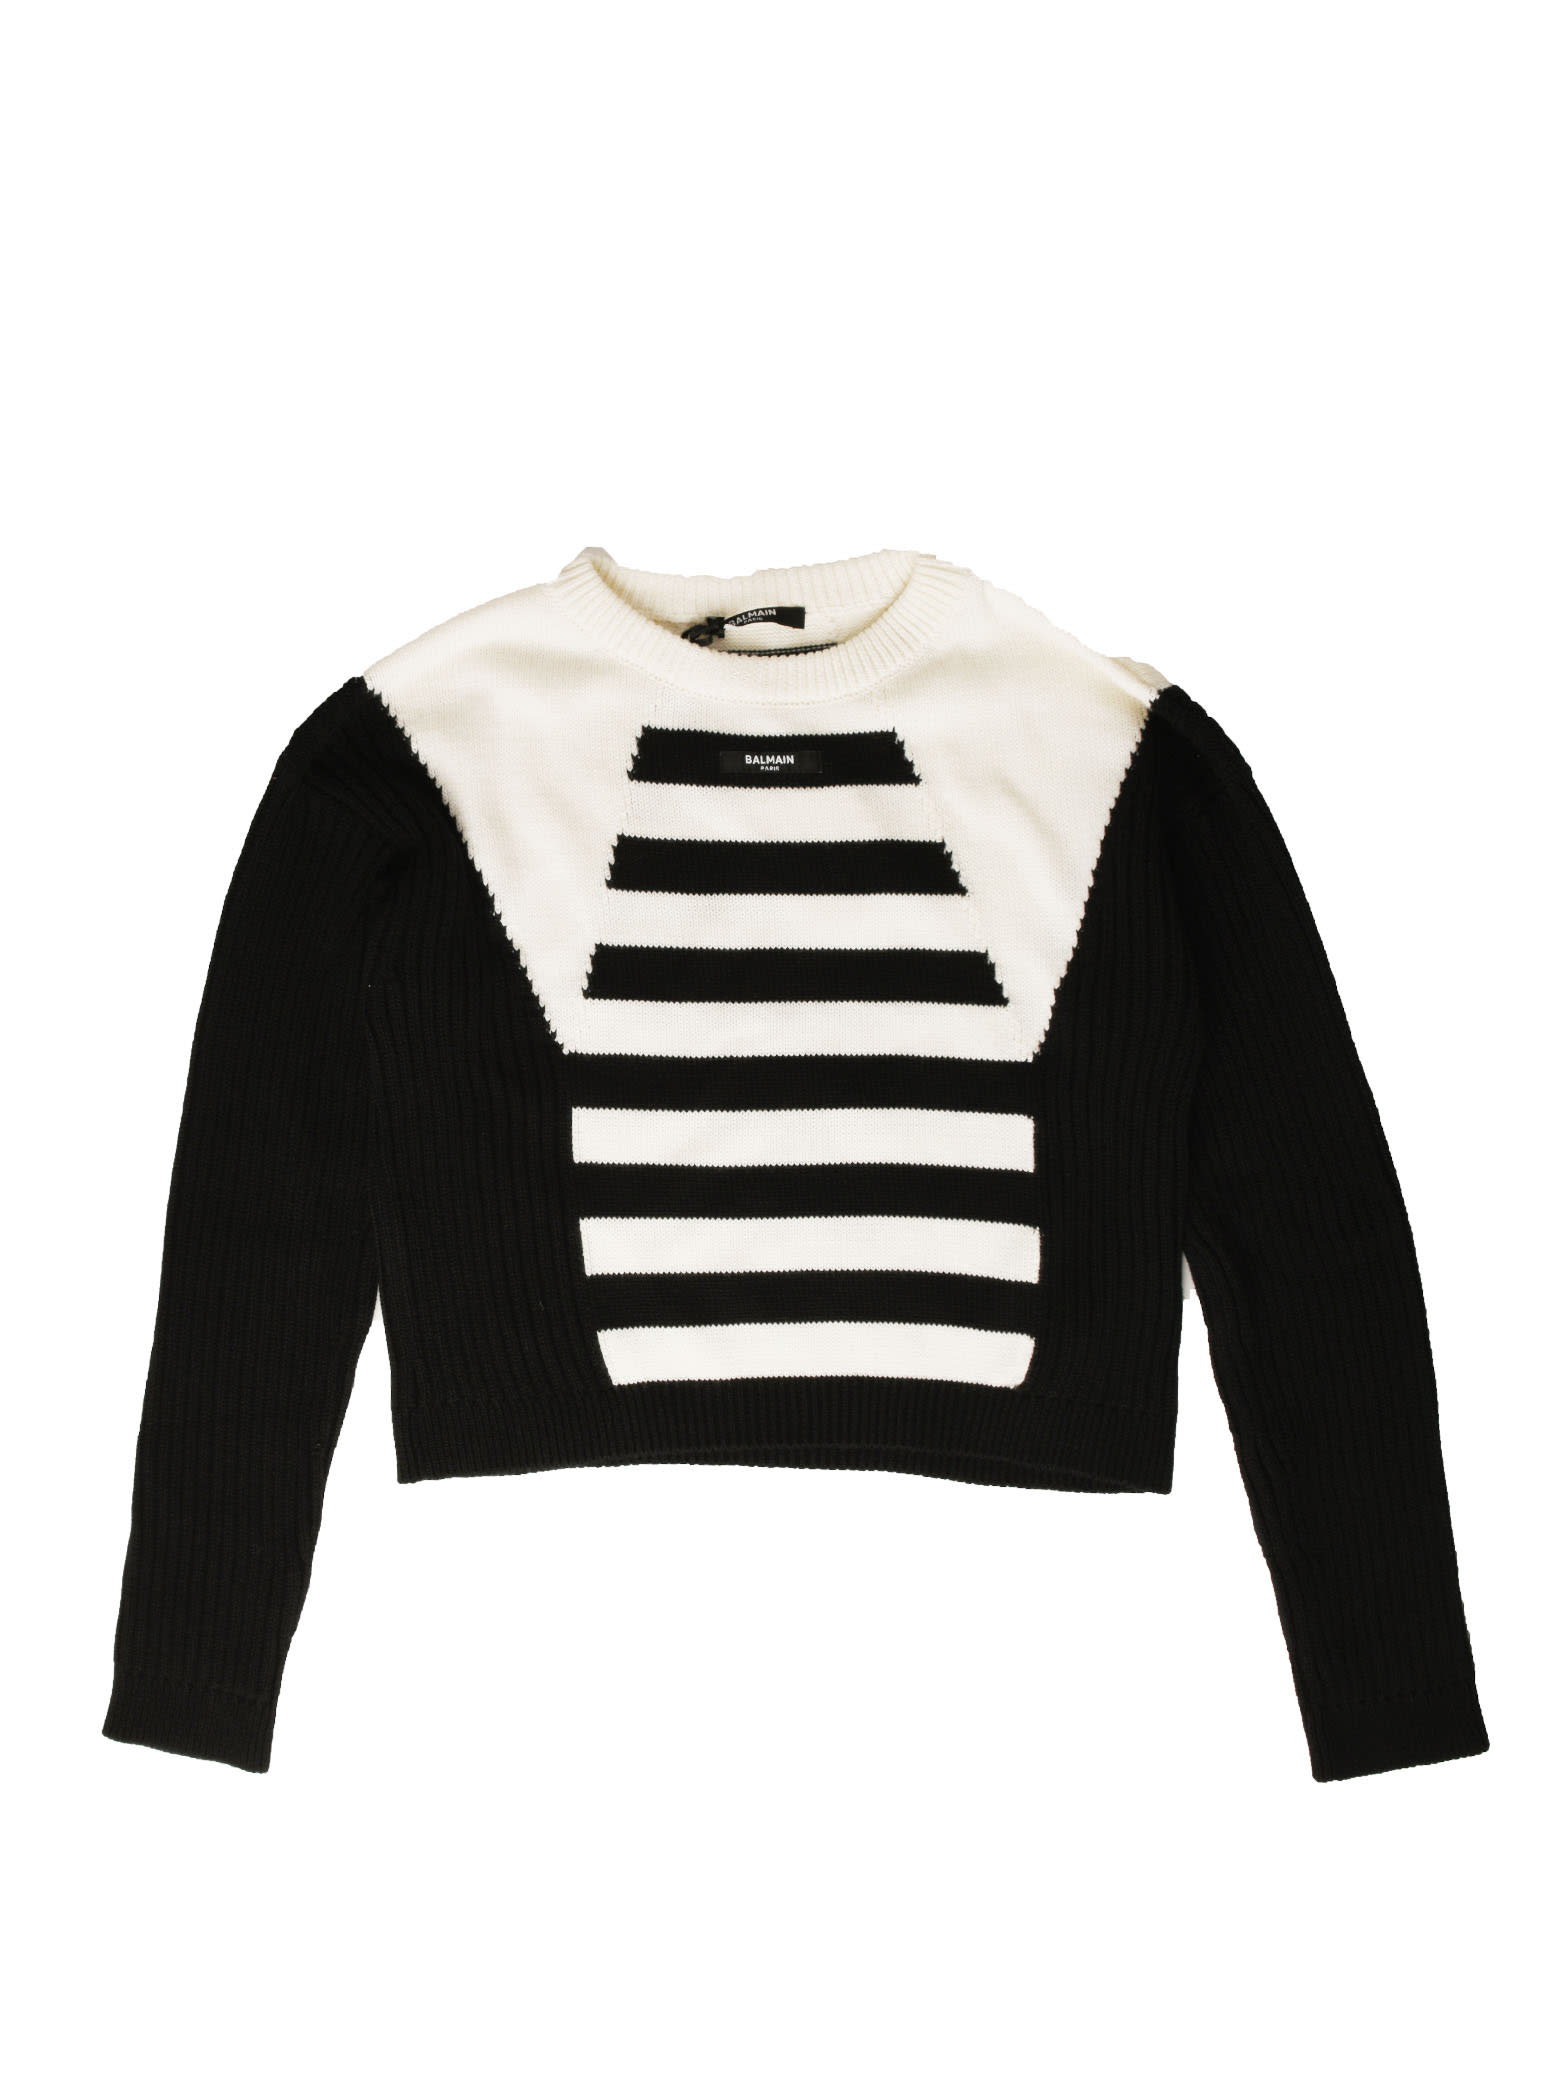 Balmain Black And White Crewneck Sweater